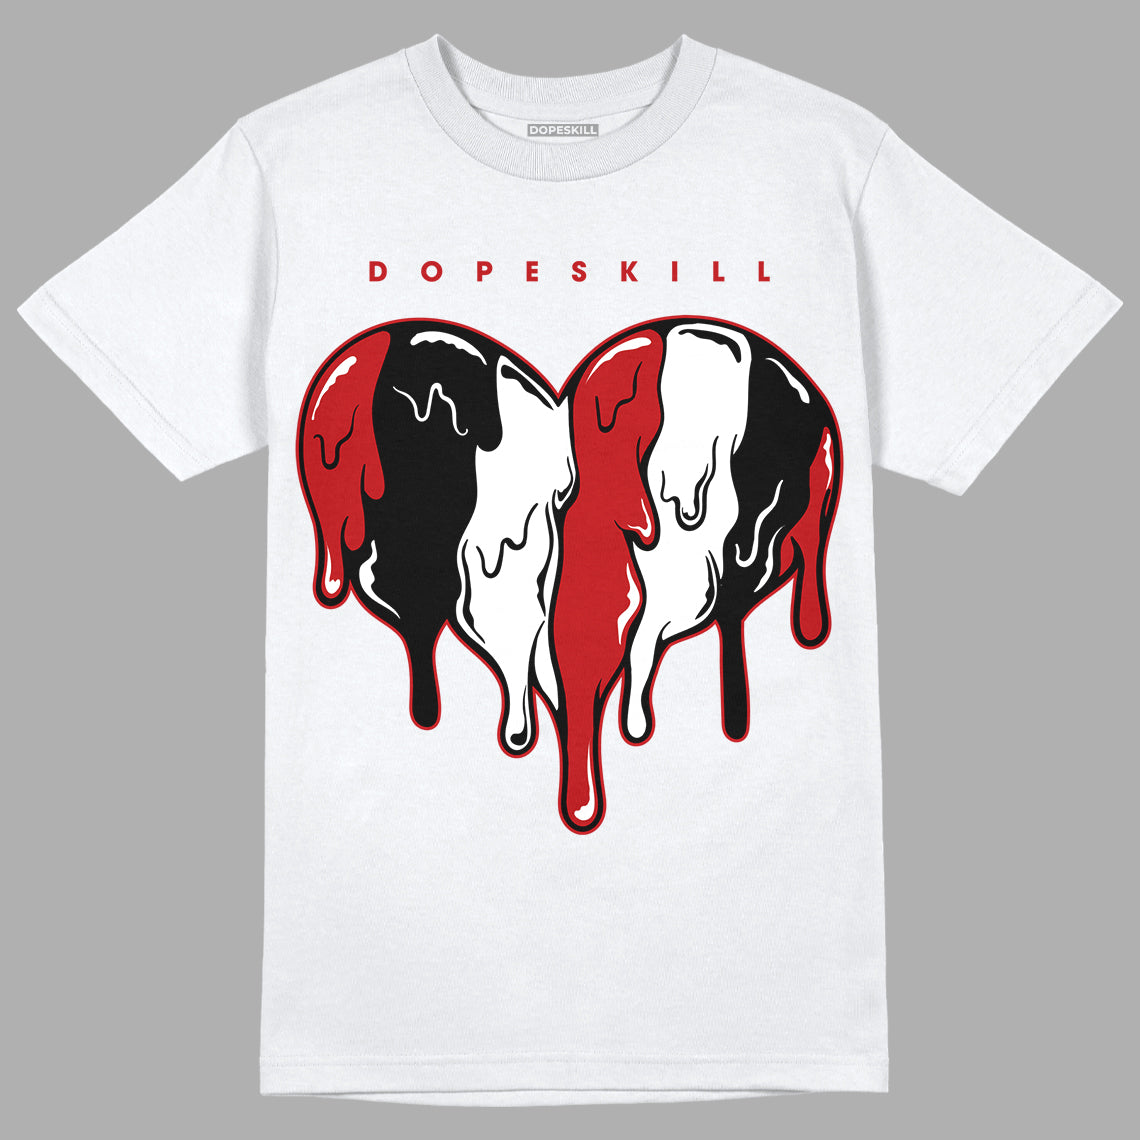 Playoffs 13s DopeSkill T-Shirt Slime Drip Heart Graphic - White